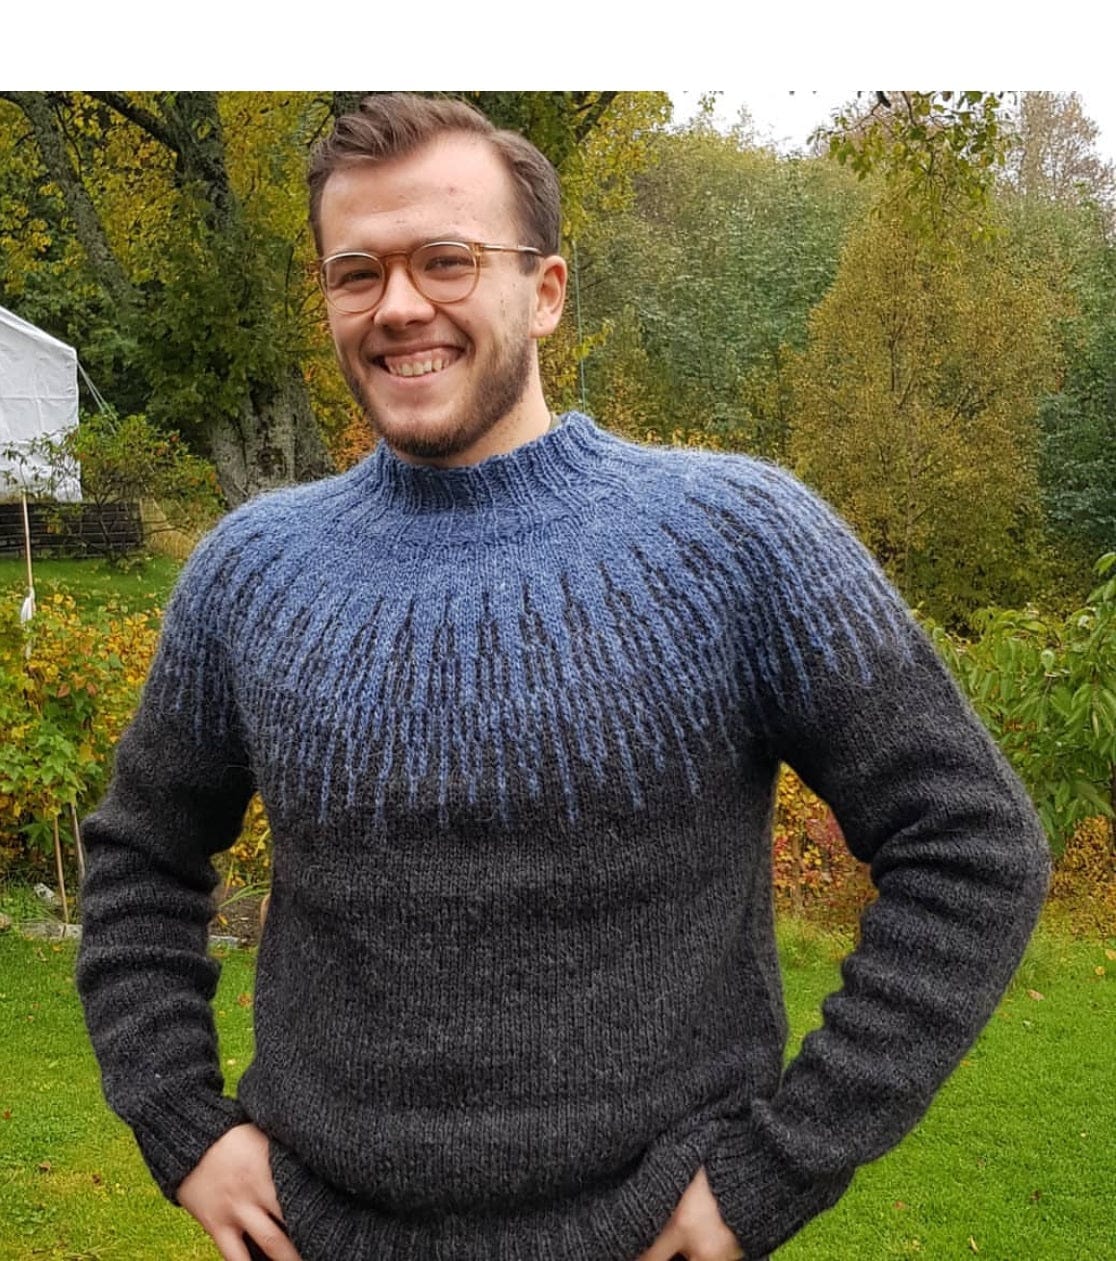 Arnar Icelandic sweater Black and Blue - Knitting Kit - The Icelandic Store